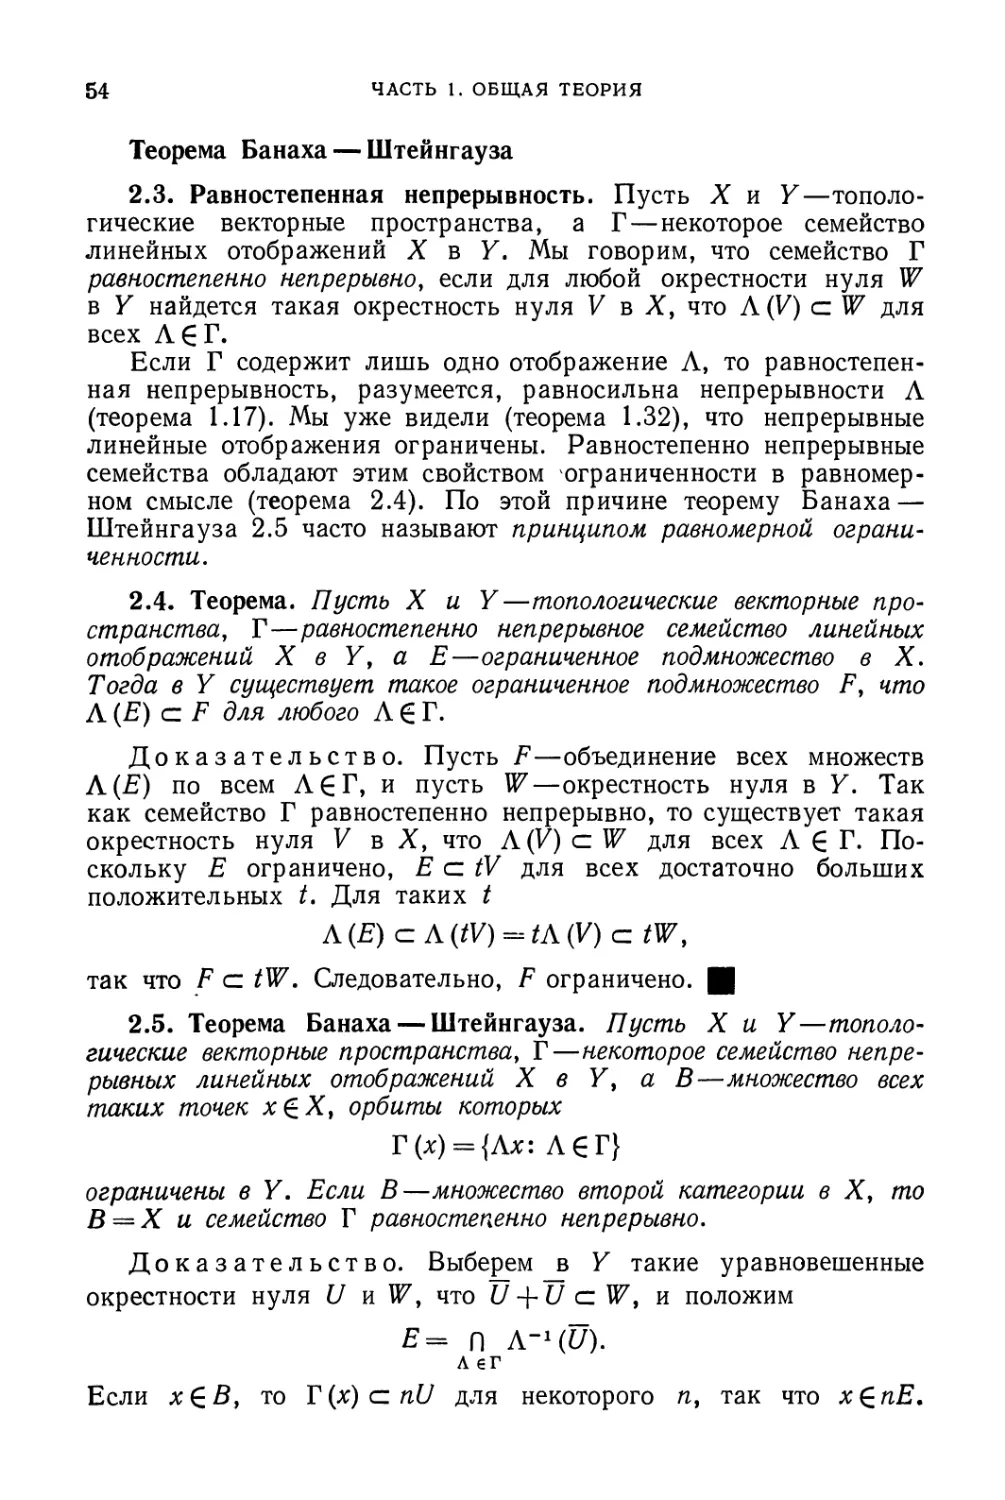 Теорема Банаха — Штейнгауза